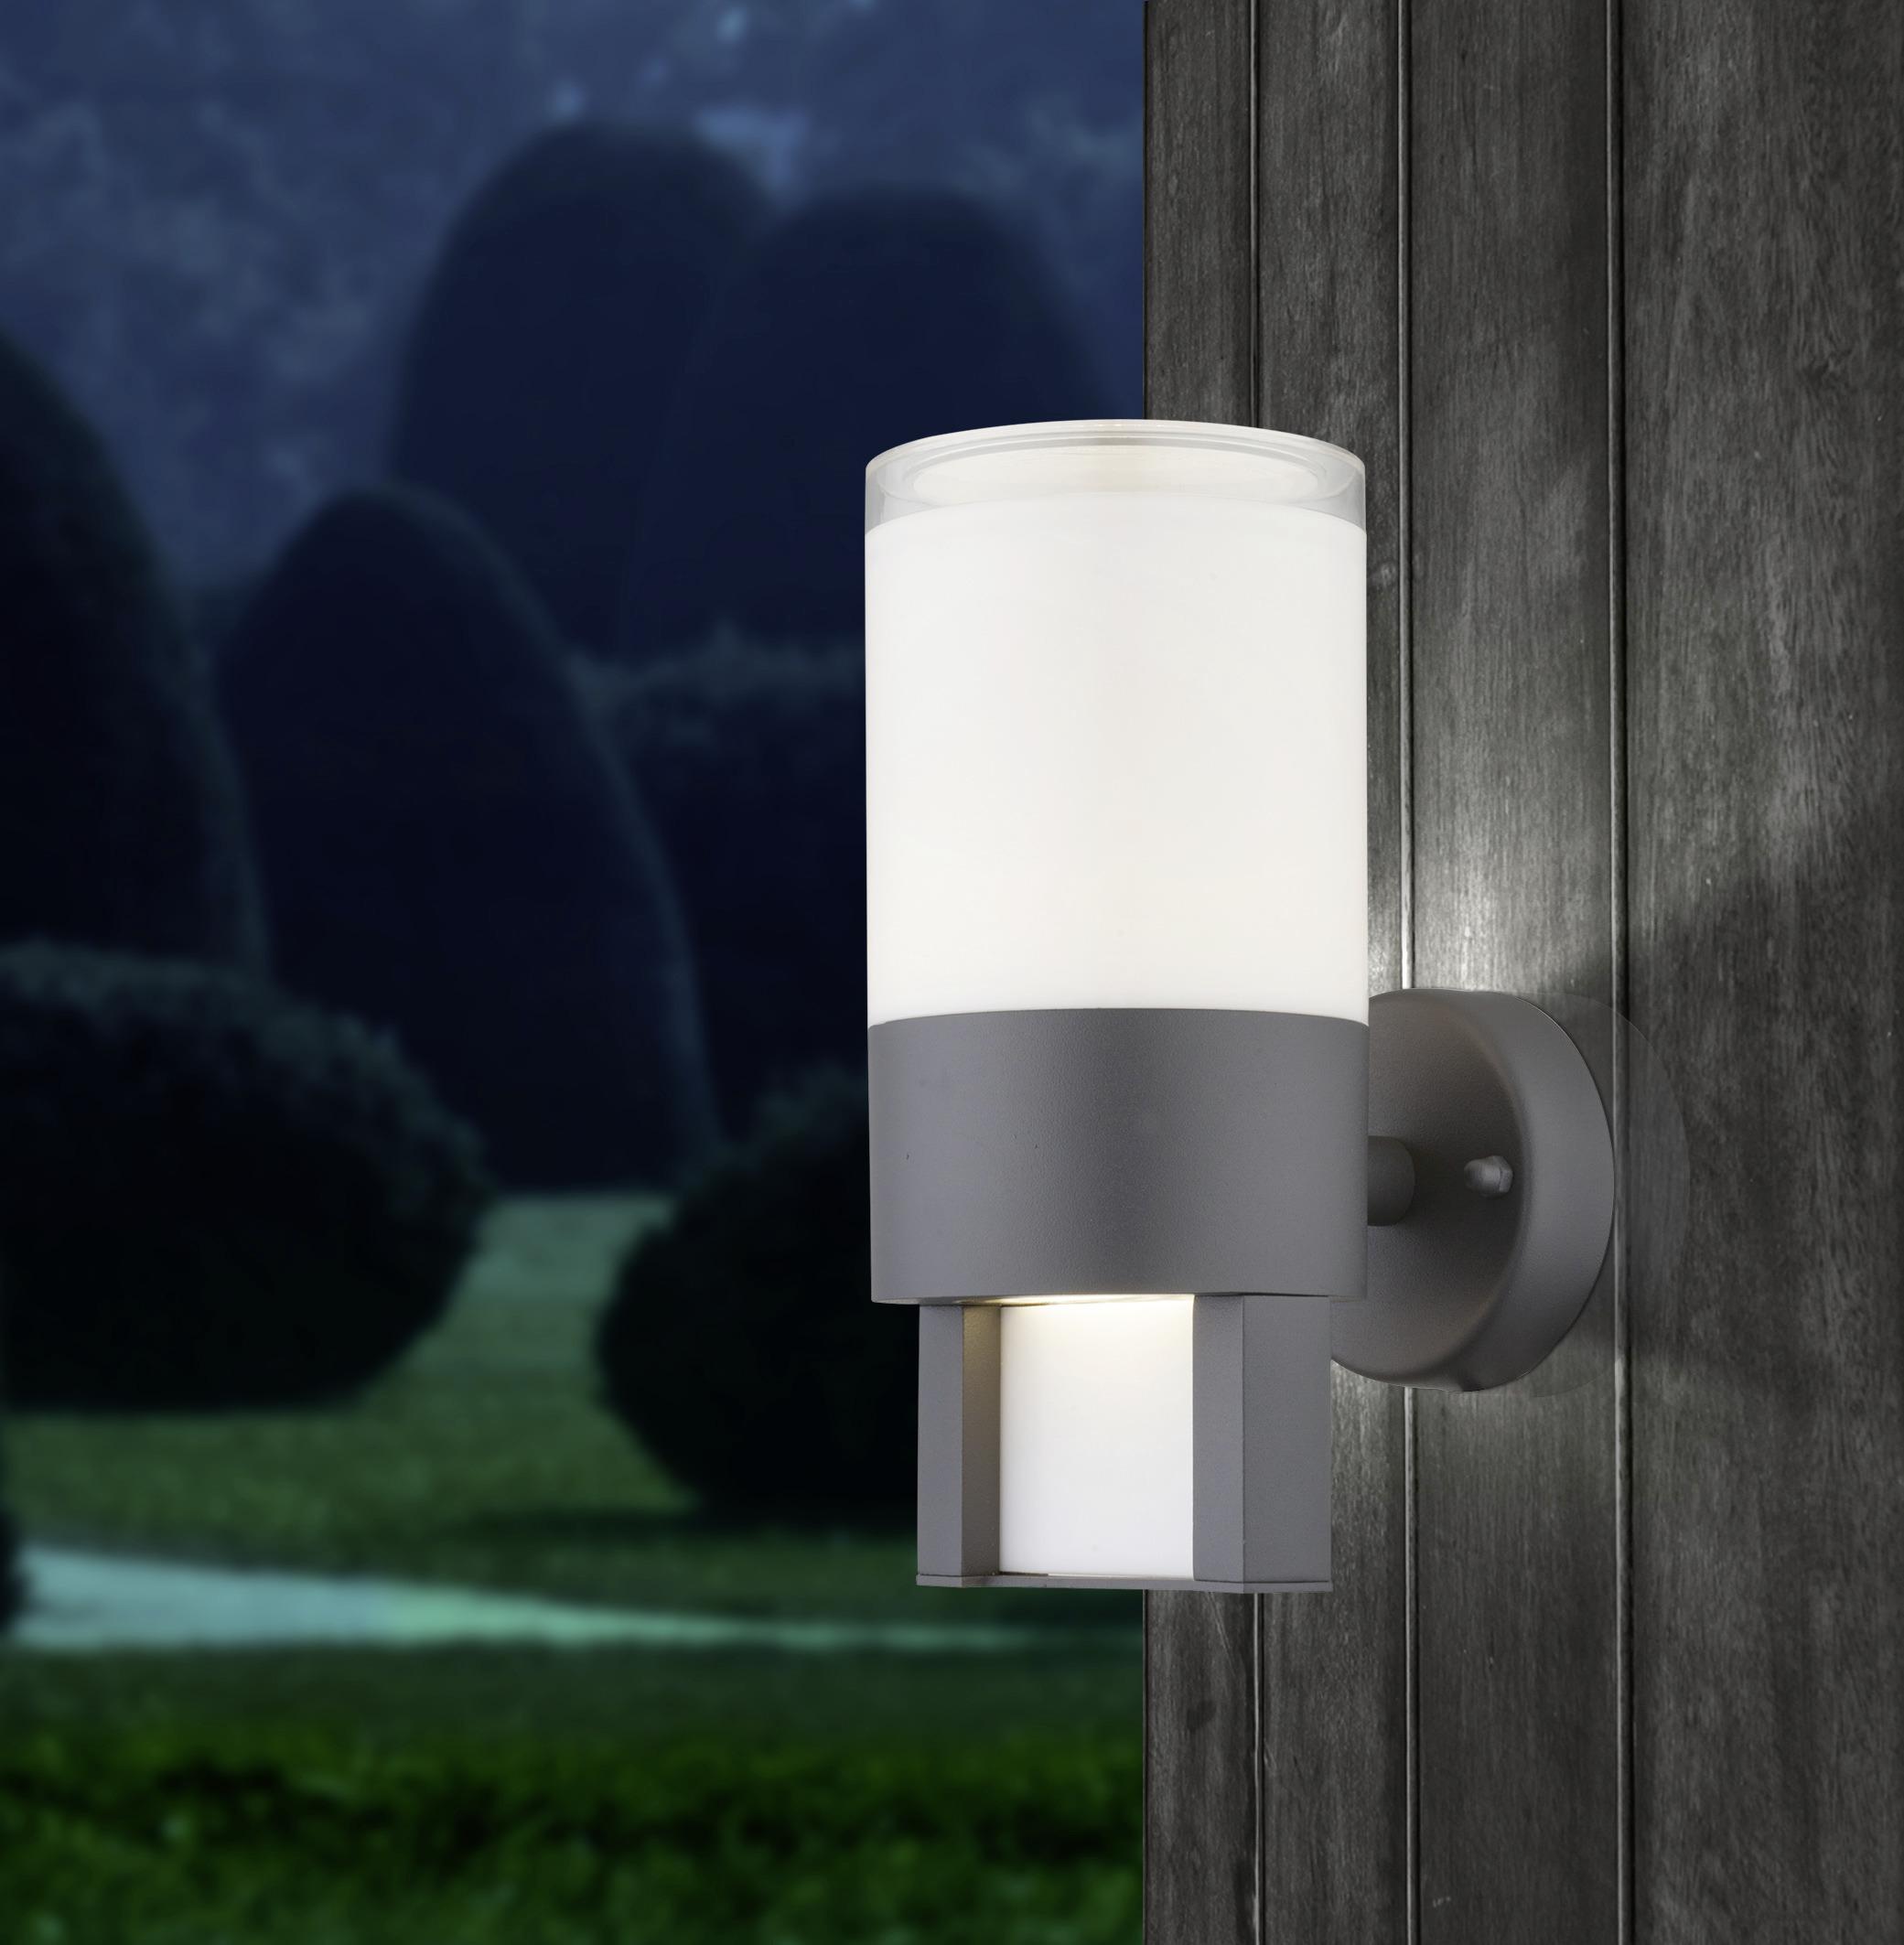 LED-Außenleuchte Nexa 12,2 Watt Kunststoff, Wandmontage - Weiß/Grau, Design, Kunststoff/Metall (10/15/22,5cm) - Globo